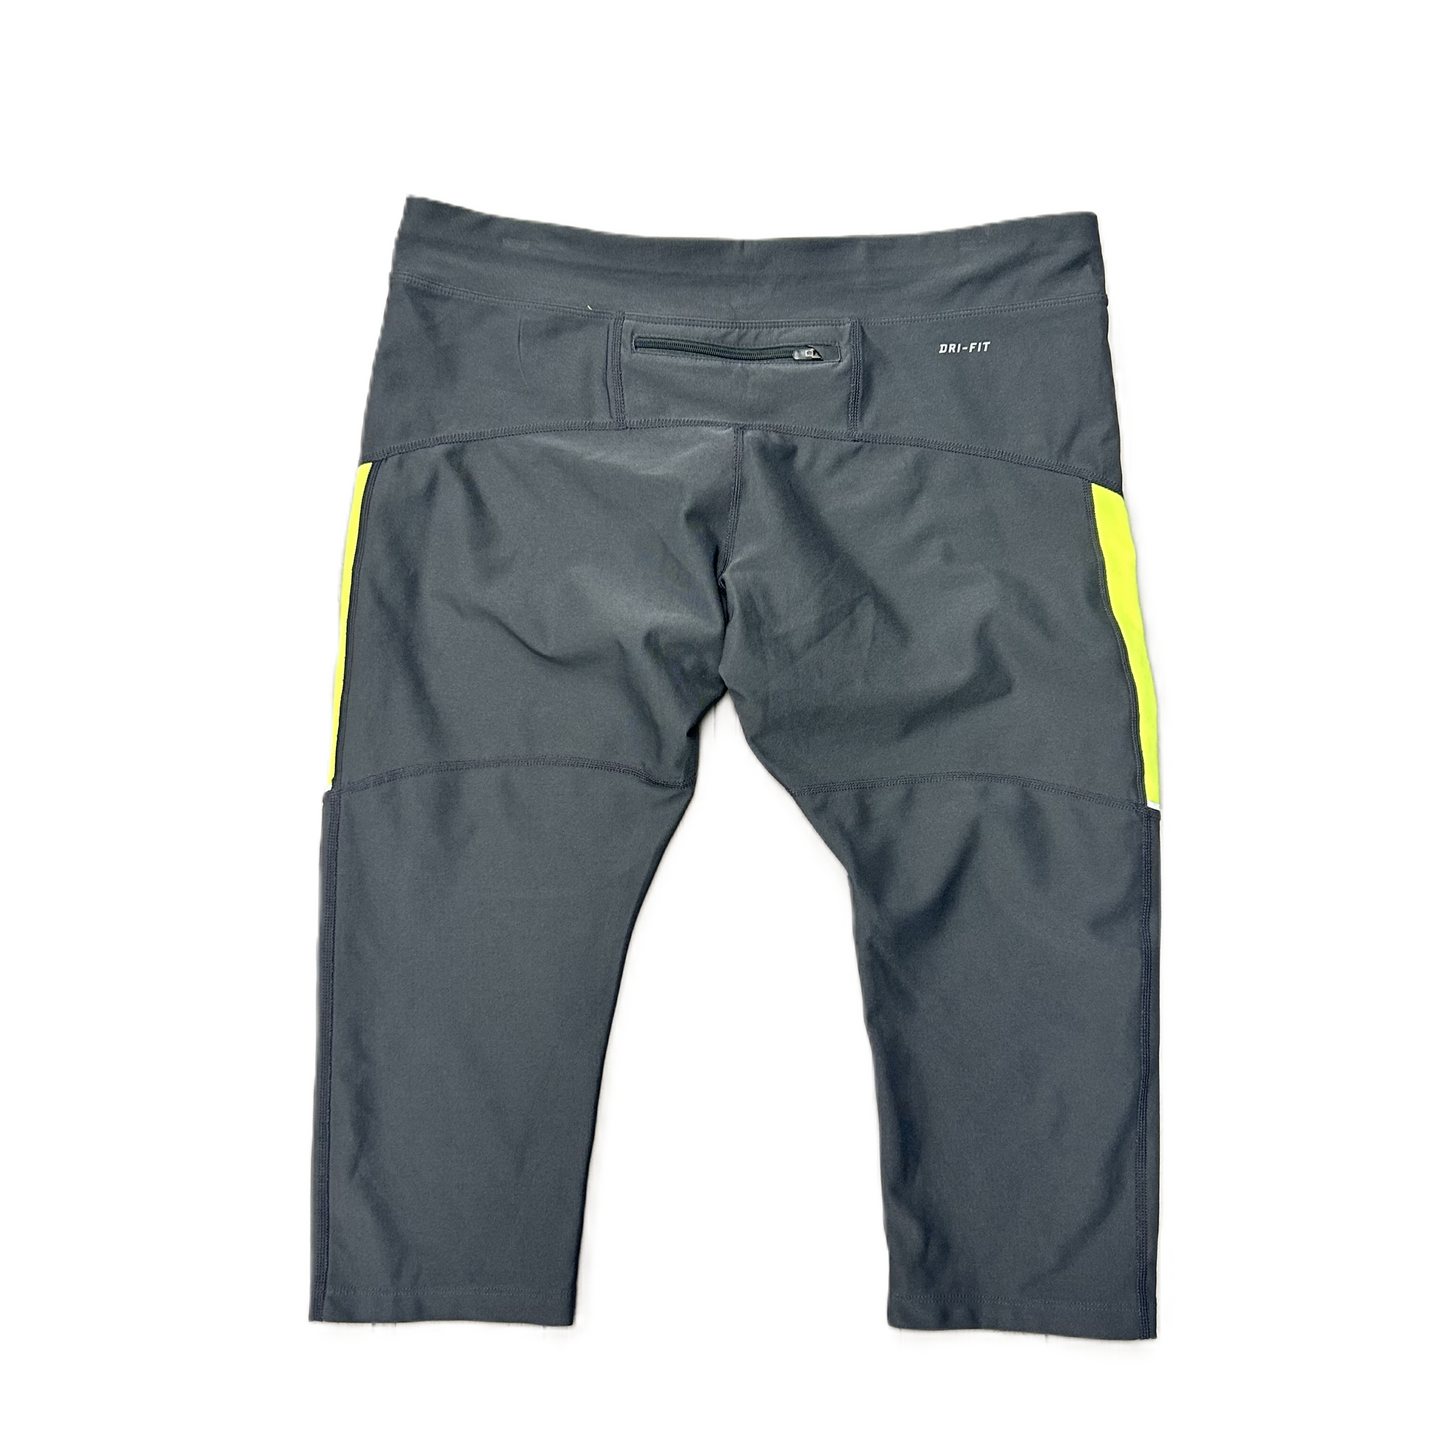 Green & Grey Athletic Leggings By Nike Apparel, Size: Xl